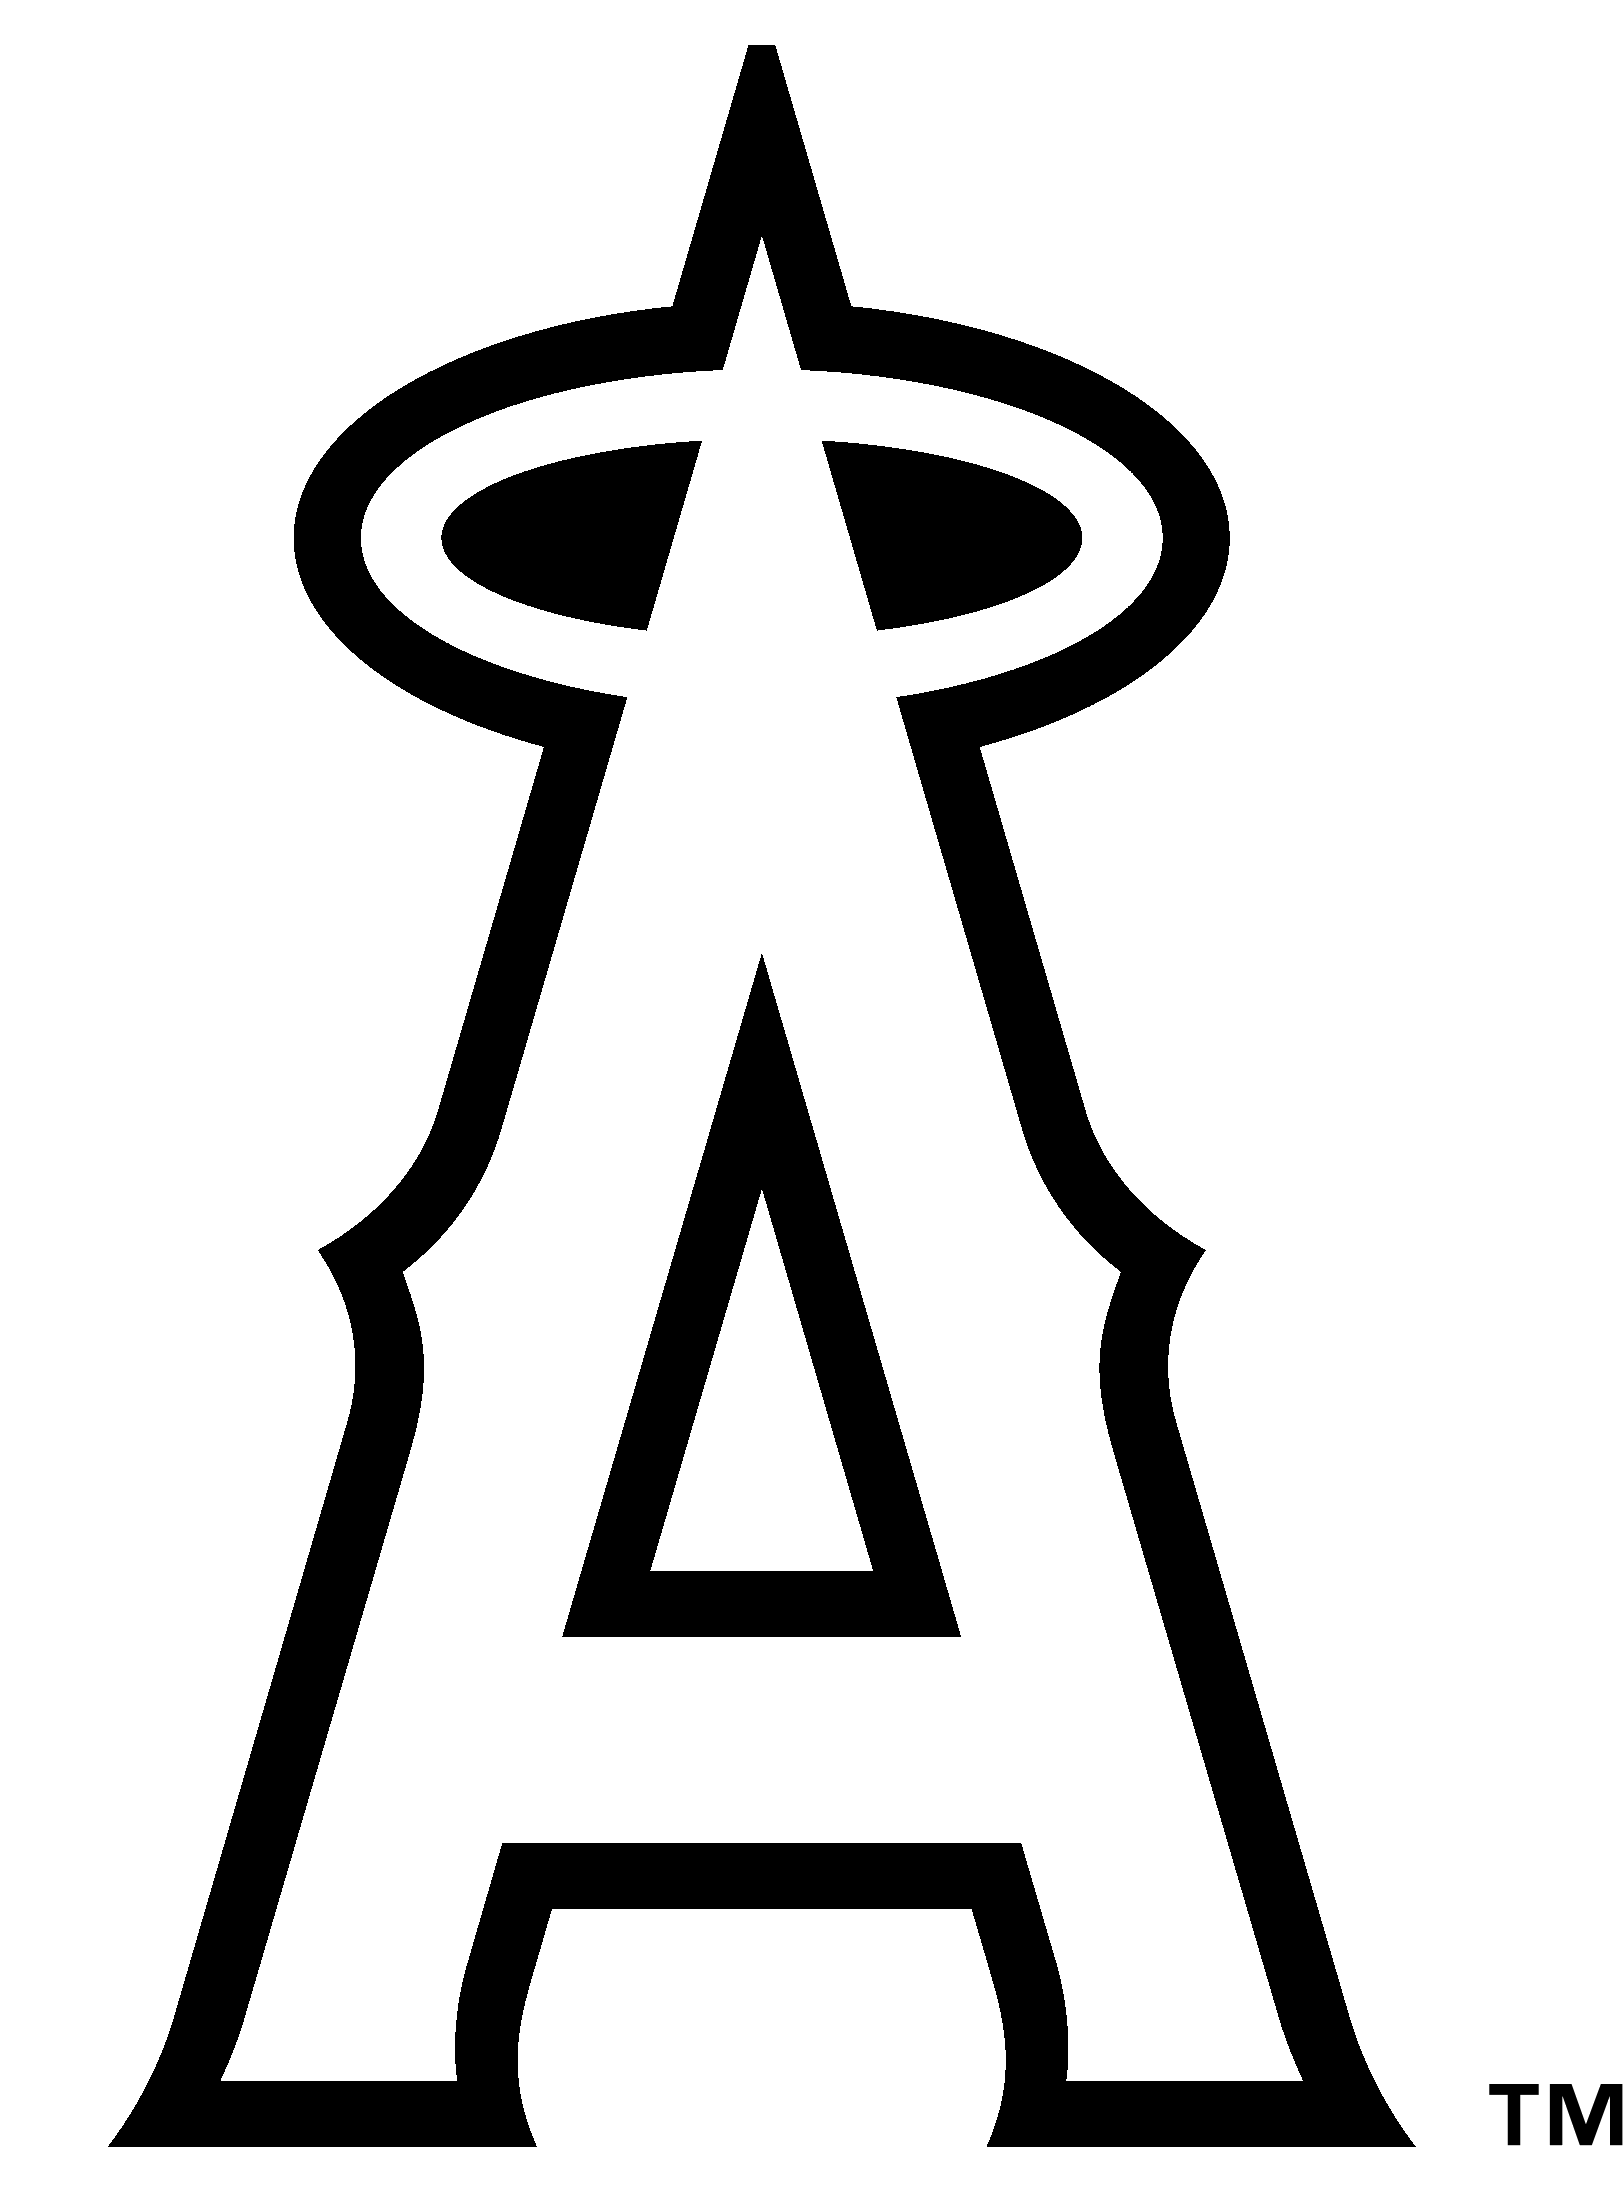 Anaheim Angels 04 Logo Black And White - Los Angeles Angels Of Anaheim (2400x2400)